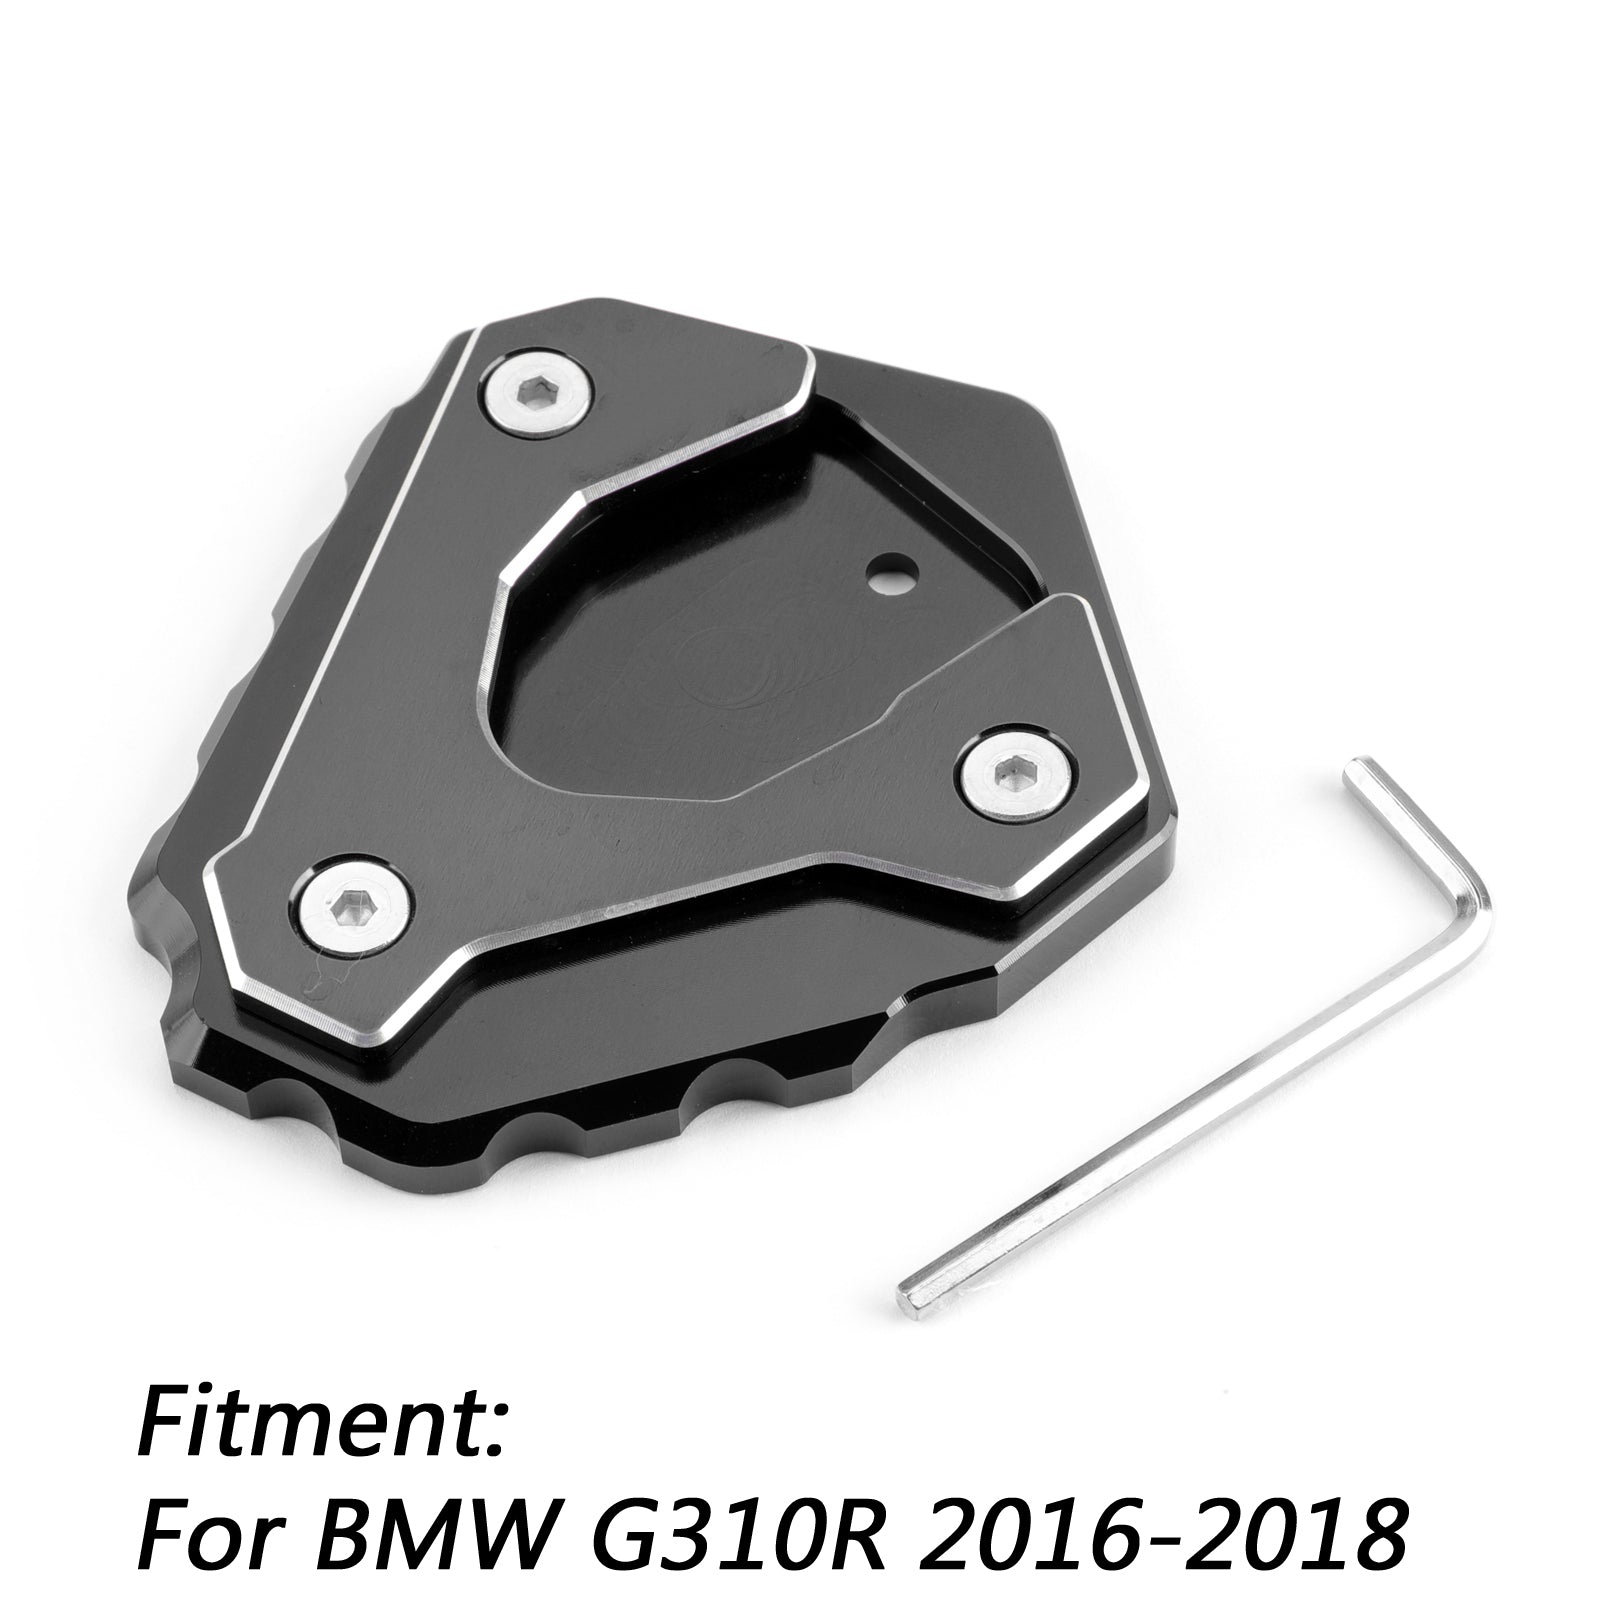 Soporte de base de ampliación de extensión de soporte lateral de pata de cabra CNC para BMW G310R 2016-2018 genérico